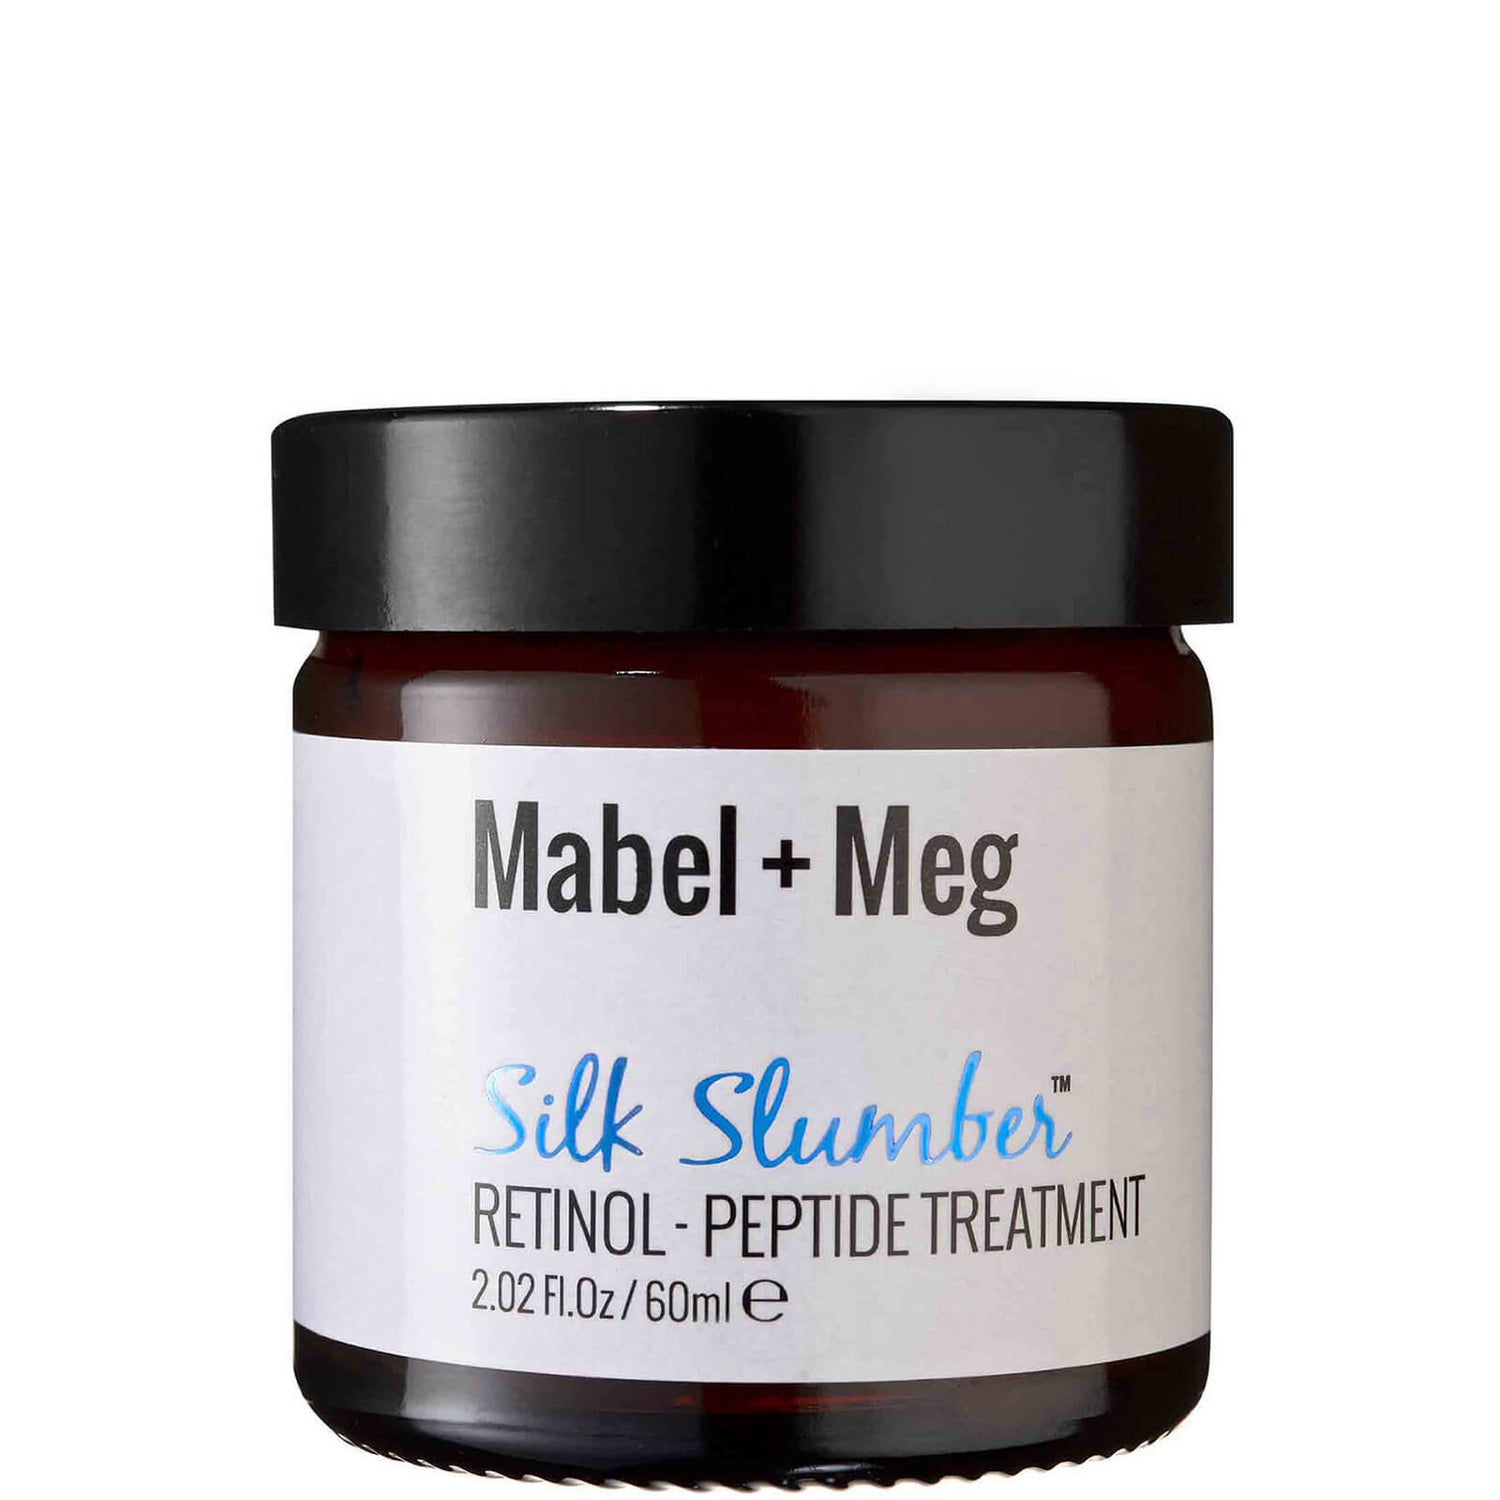 Mabel + Meg Silk Slumber Retinol Peptide Treatment